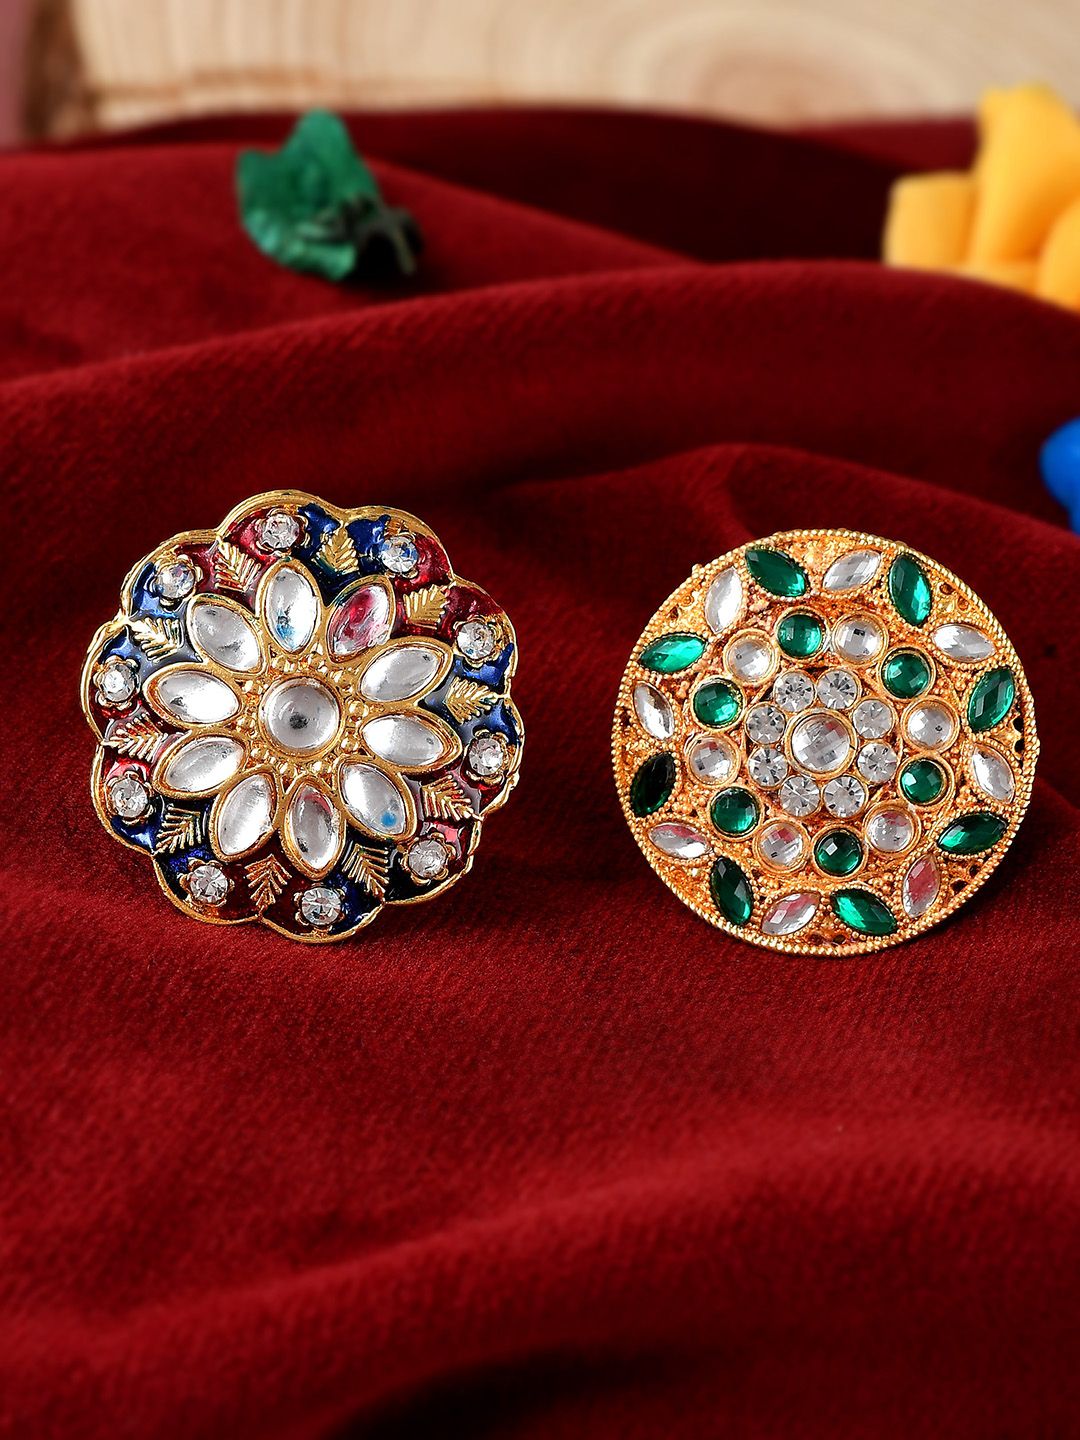 Silvermerc Designs Set Of 2 Gold-Plated & Kundan-Studded Meenakari Finger Rings Price in India